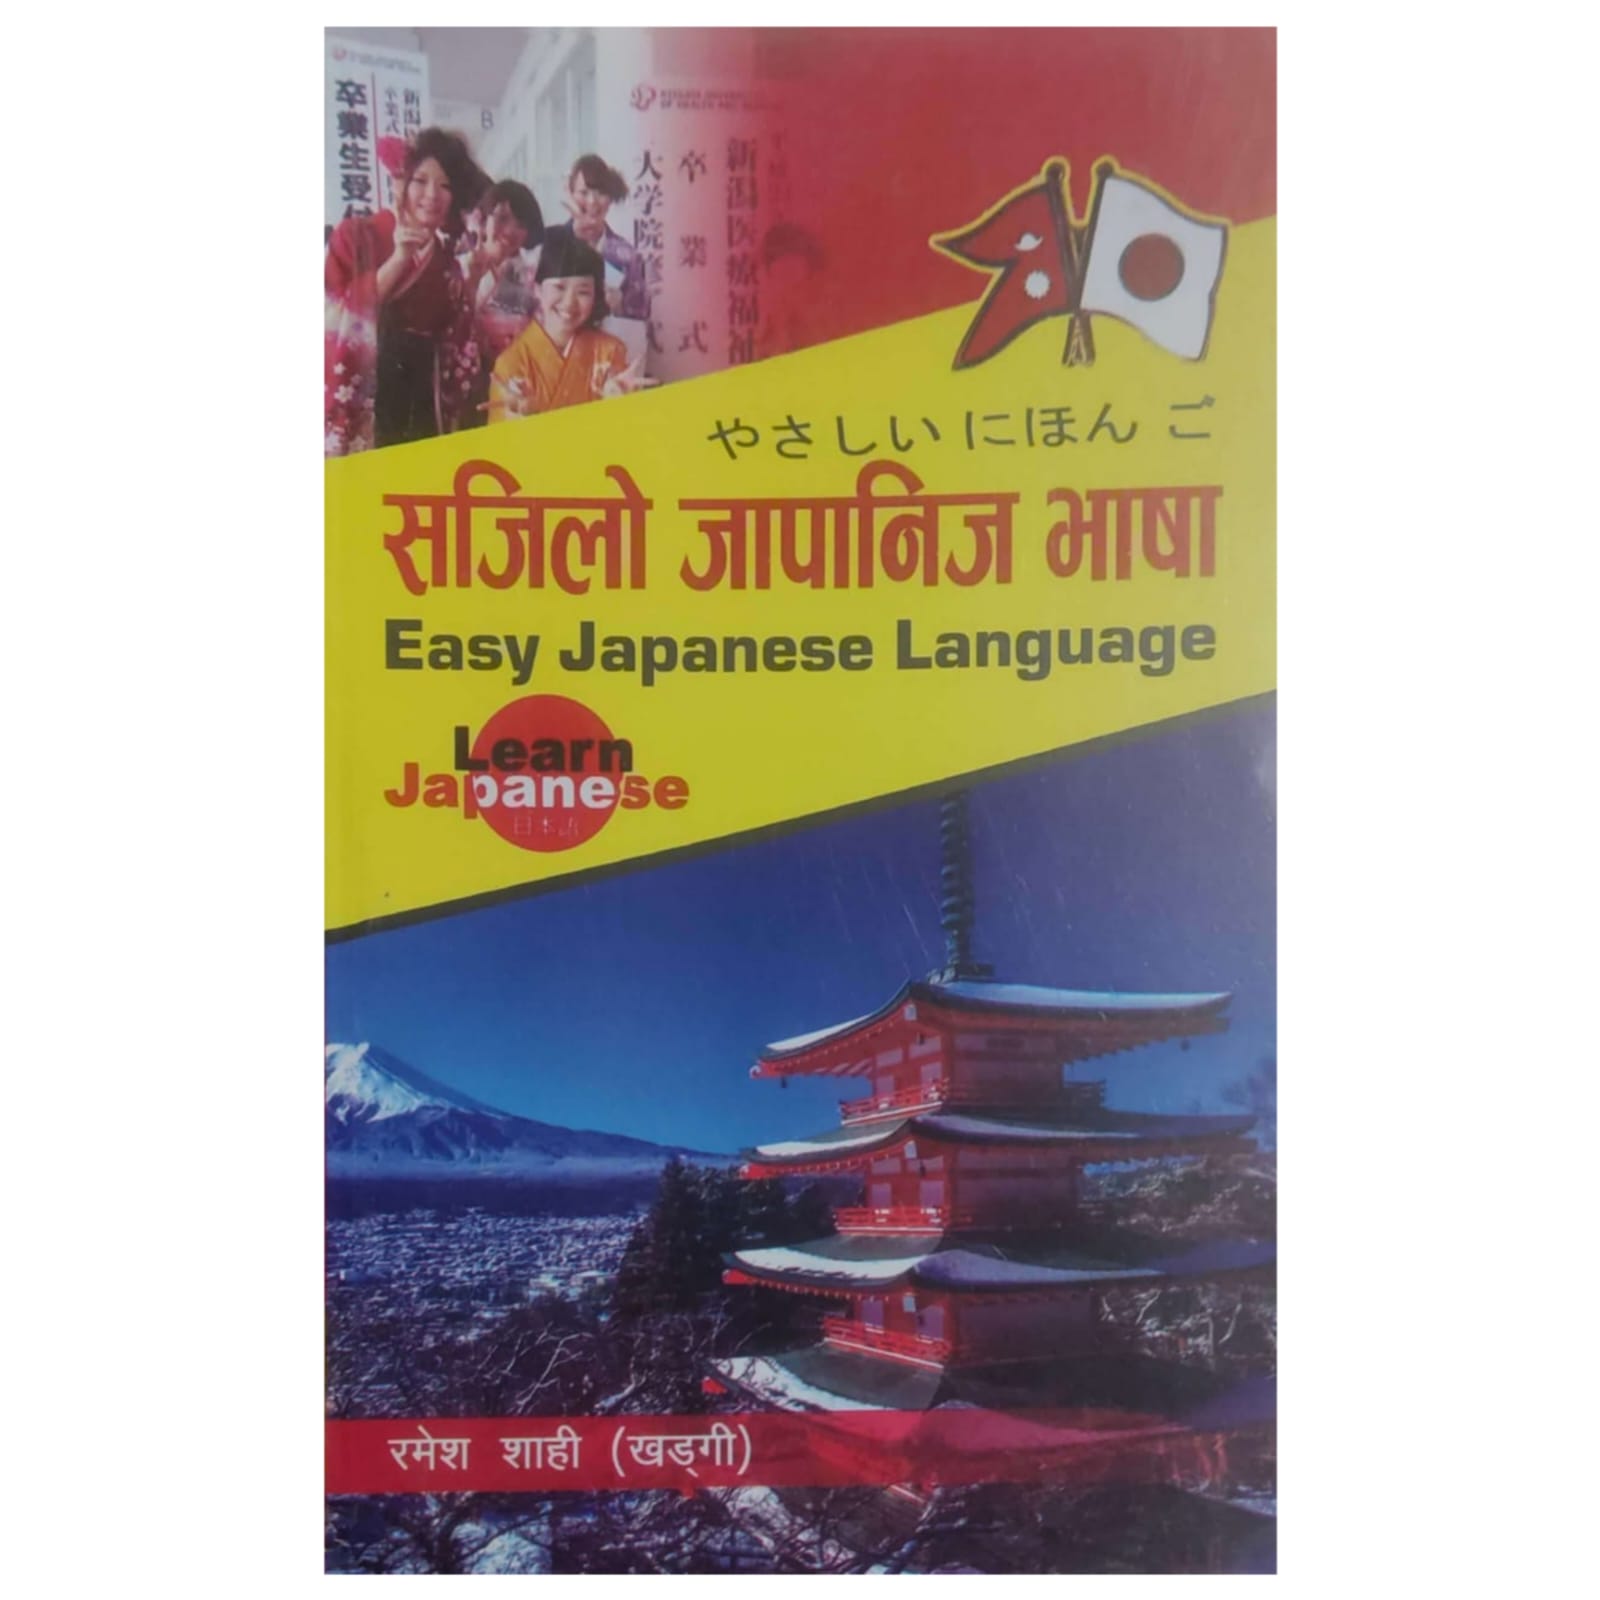 Japani Bhasa - Japanese Language - Most Admired Book For Japanese Language  in Nepal